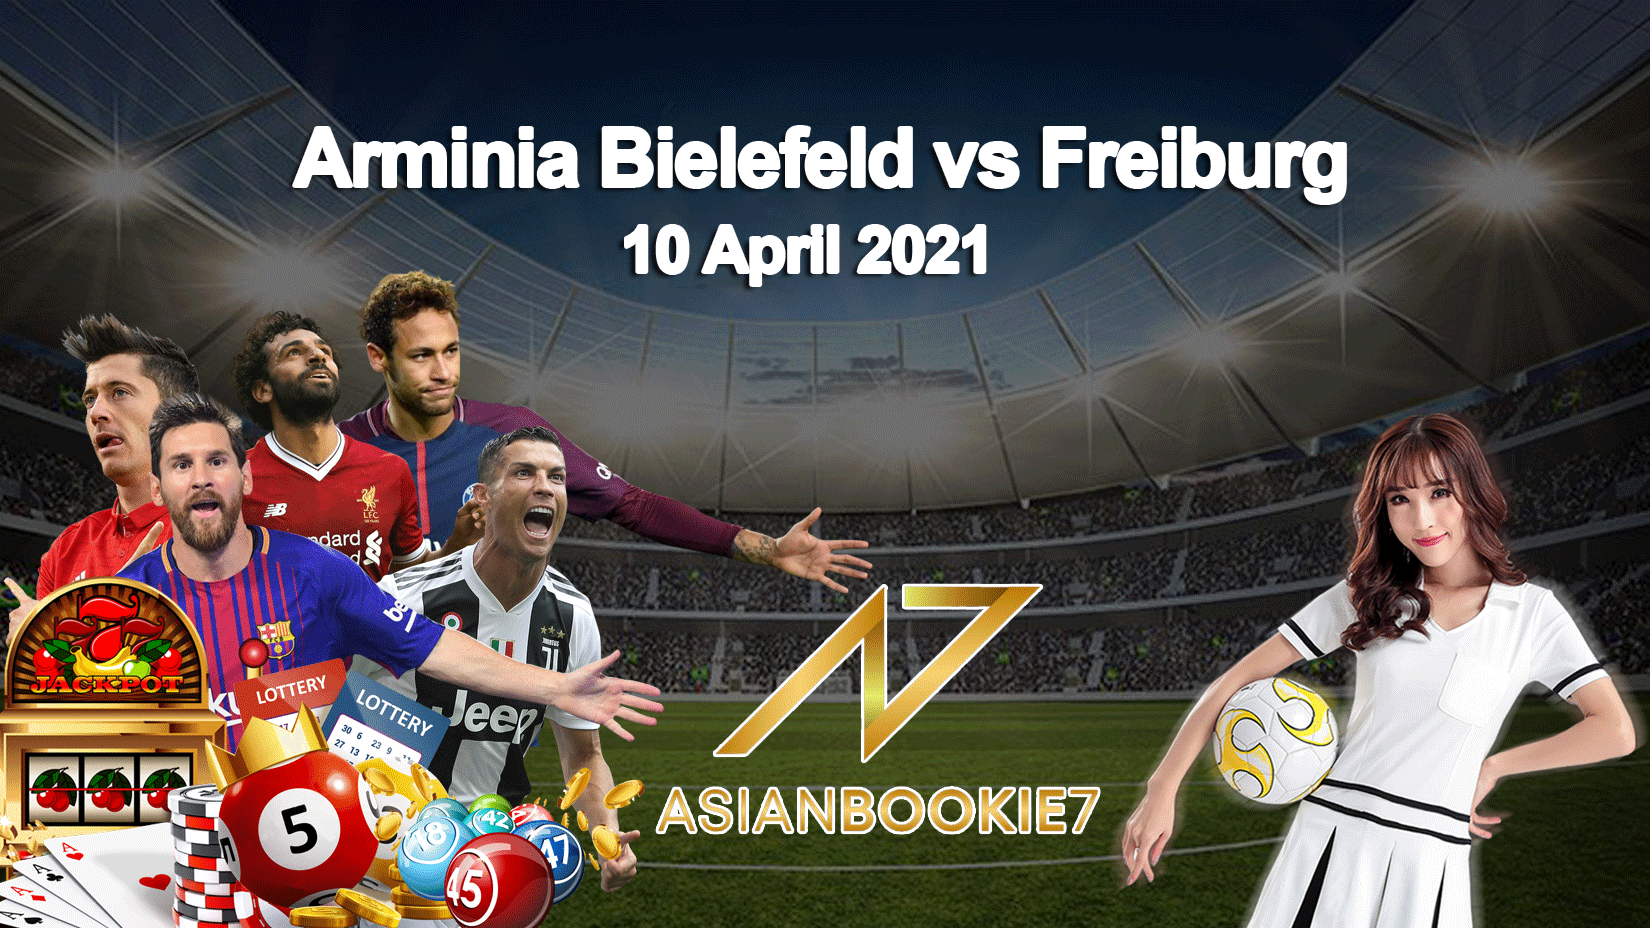 Prediksi-Arminia-Bielefeld-vs-Freiburg-10-April-2021